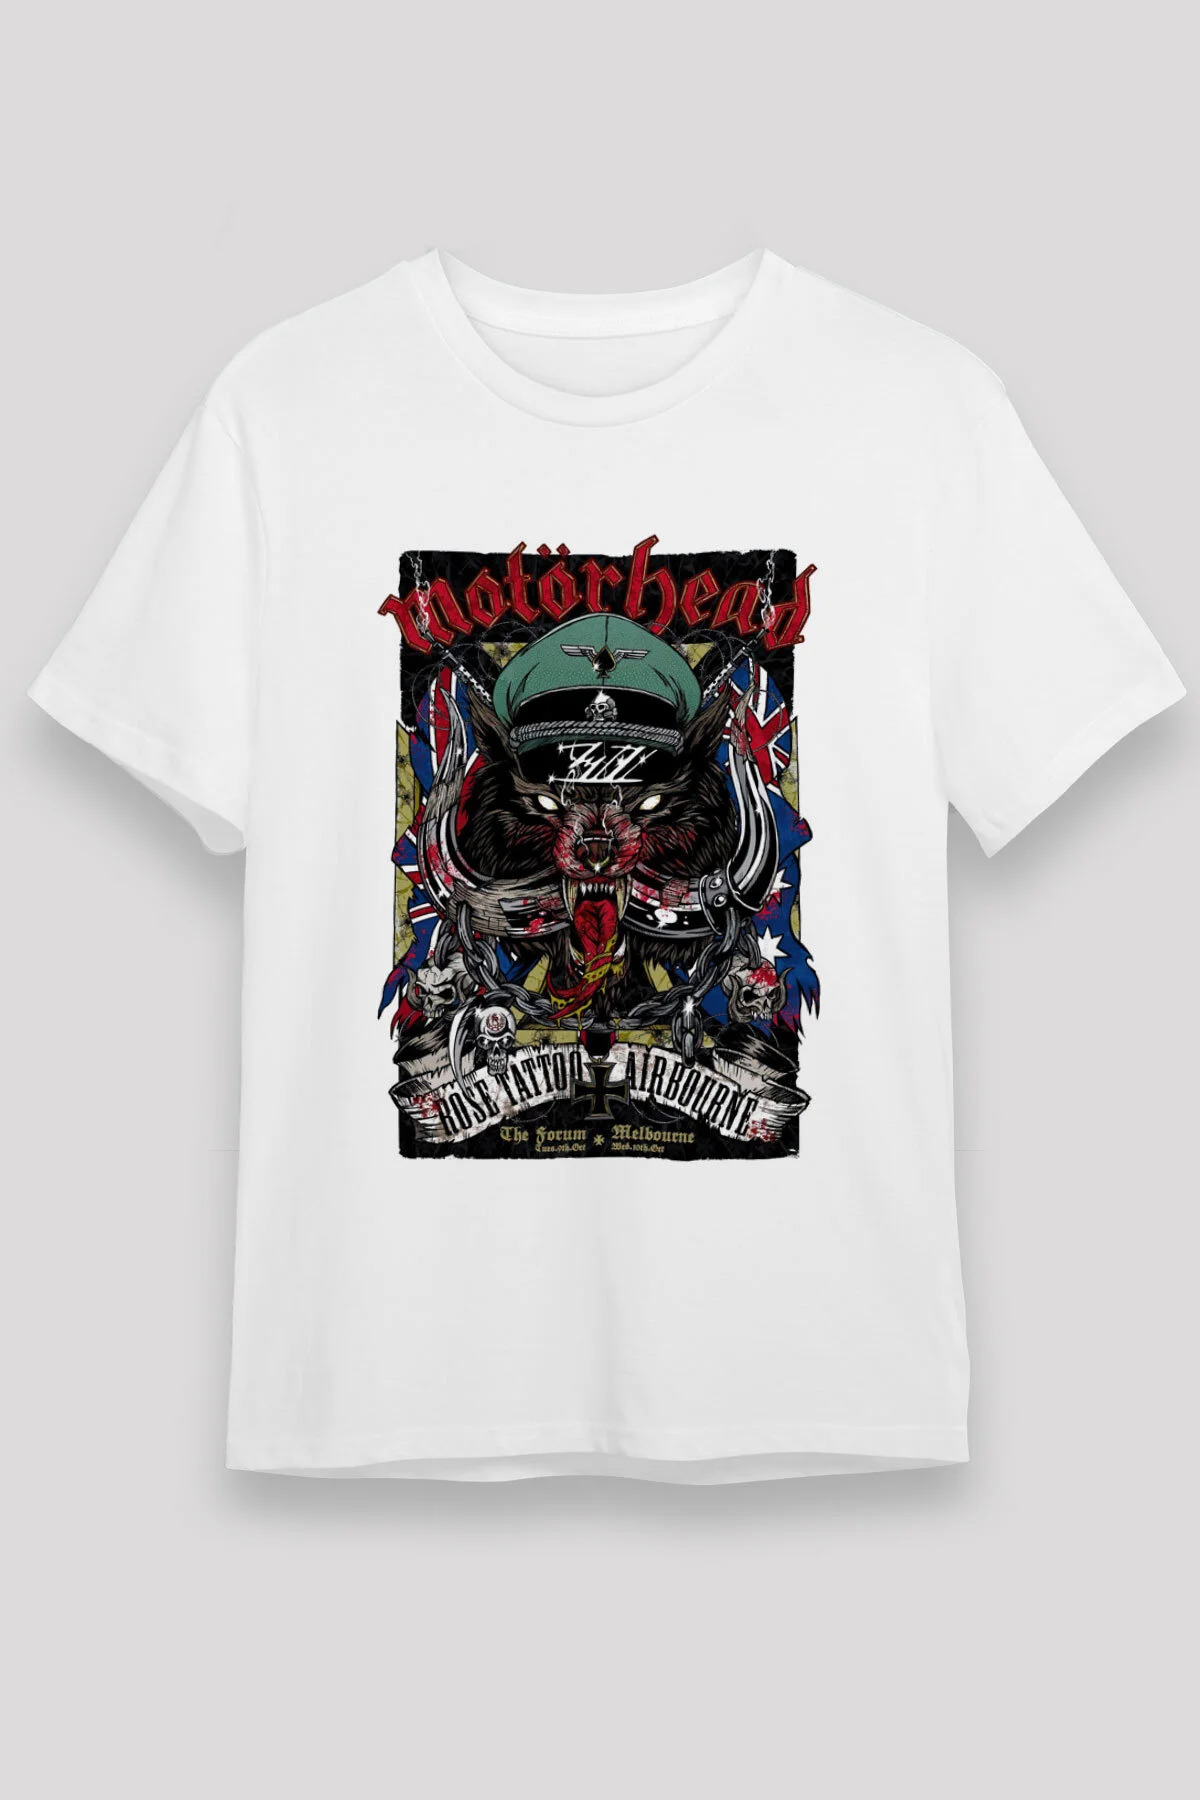 Motörhead T shirt, Music Band ,Unisex Tshirt  04/